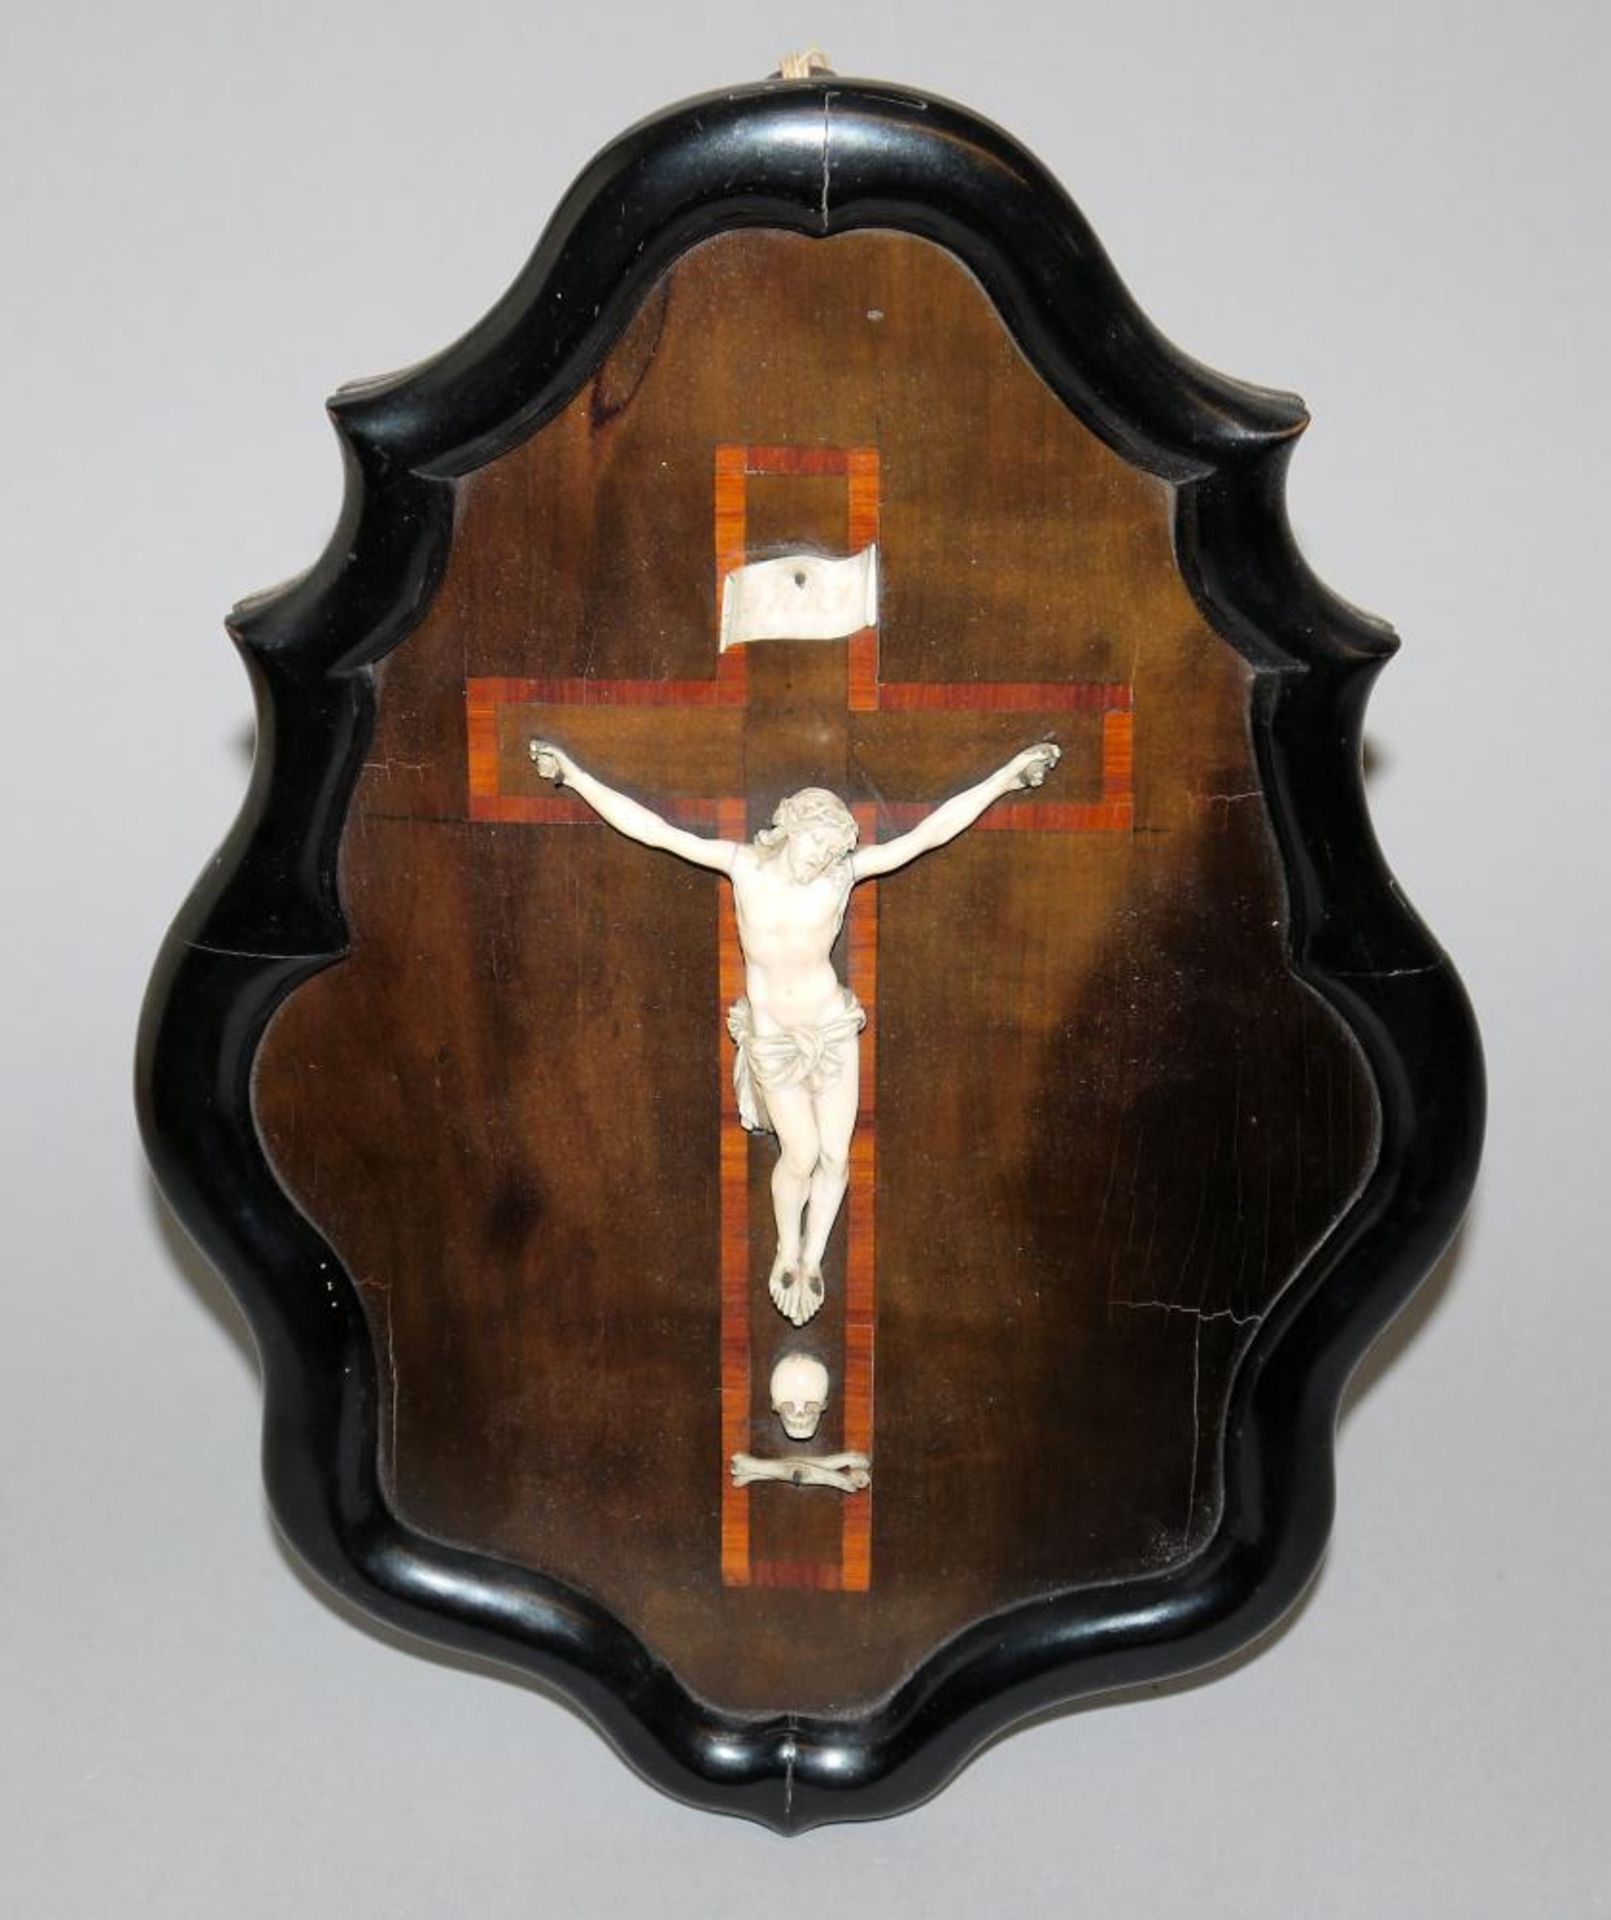 Sehr feiner Elfenbein-Kruzifixus, im ebonisierten Rahmen, 18. Jh. Kruzifixus, 4-Nagel-Typus, L: 10,5